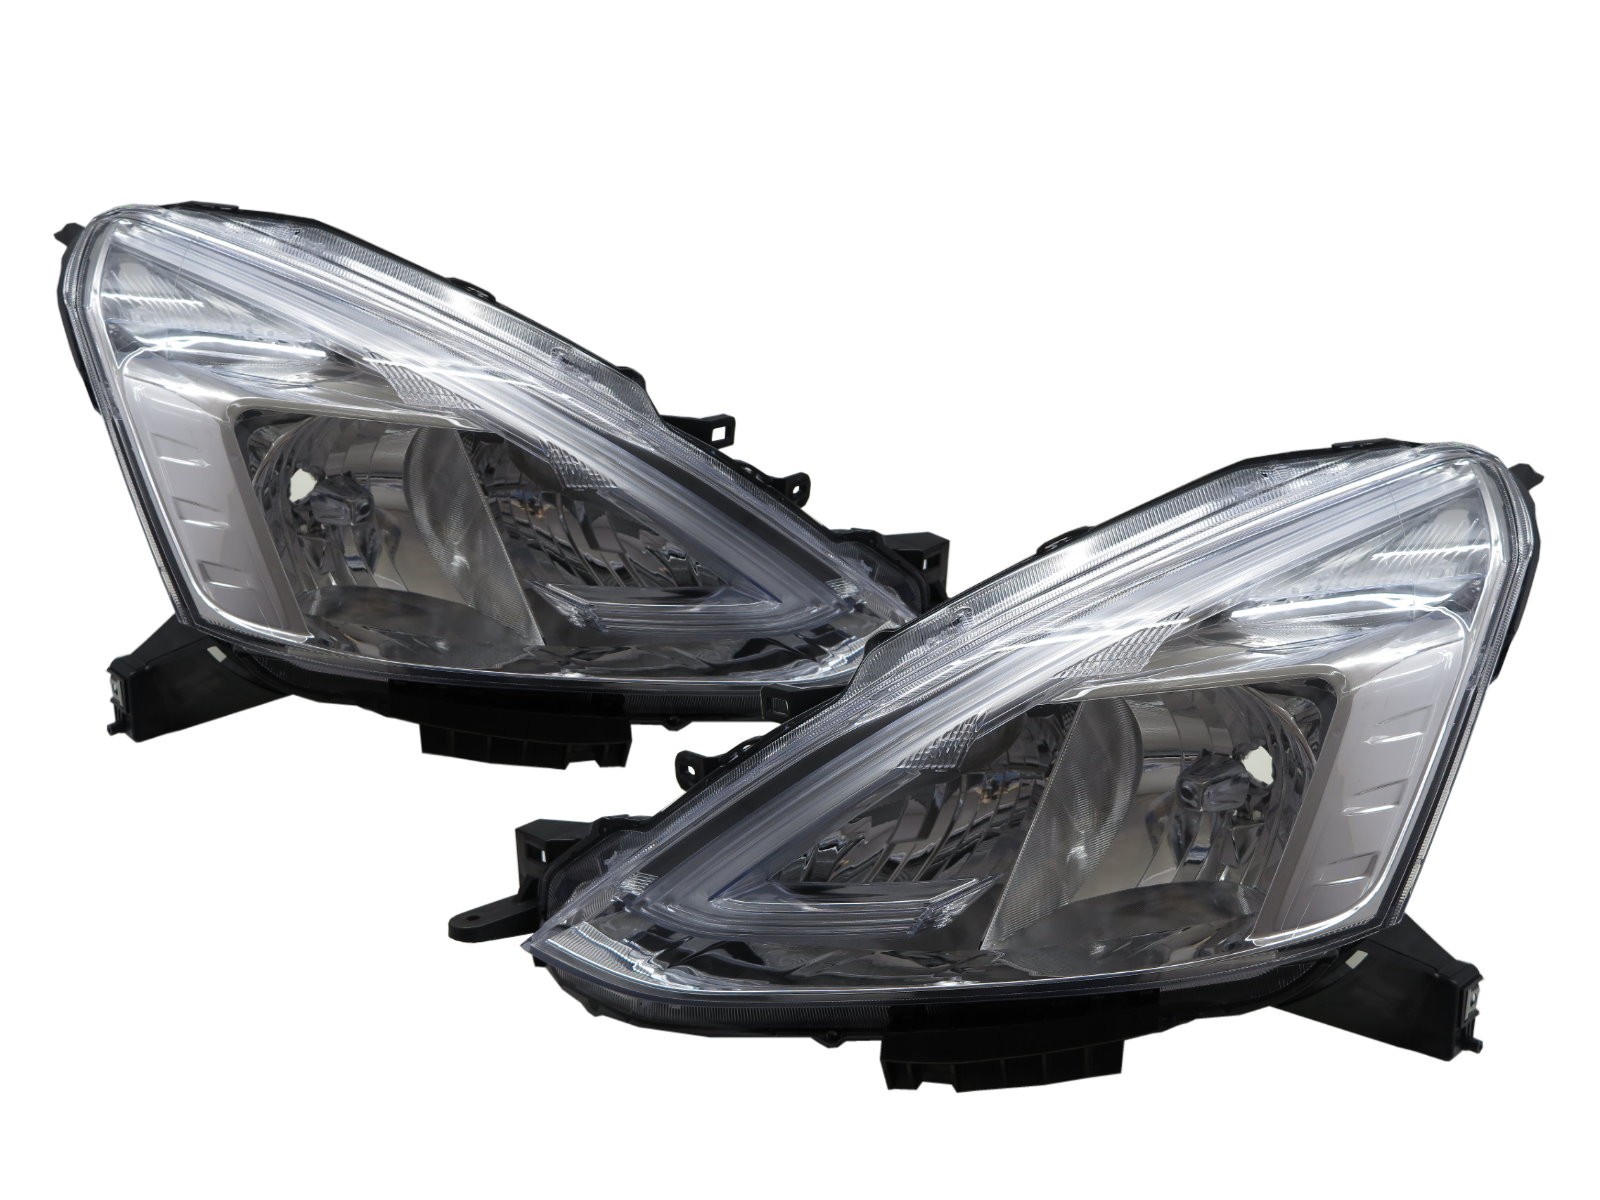 CrazyTheGod Livina X-Gear L11 Second generation 2013-present MPV 5D Clear Headlight Headlamp W/ Motor Chrome for NISSAN LHD